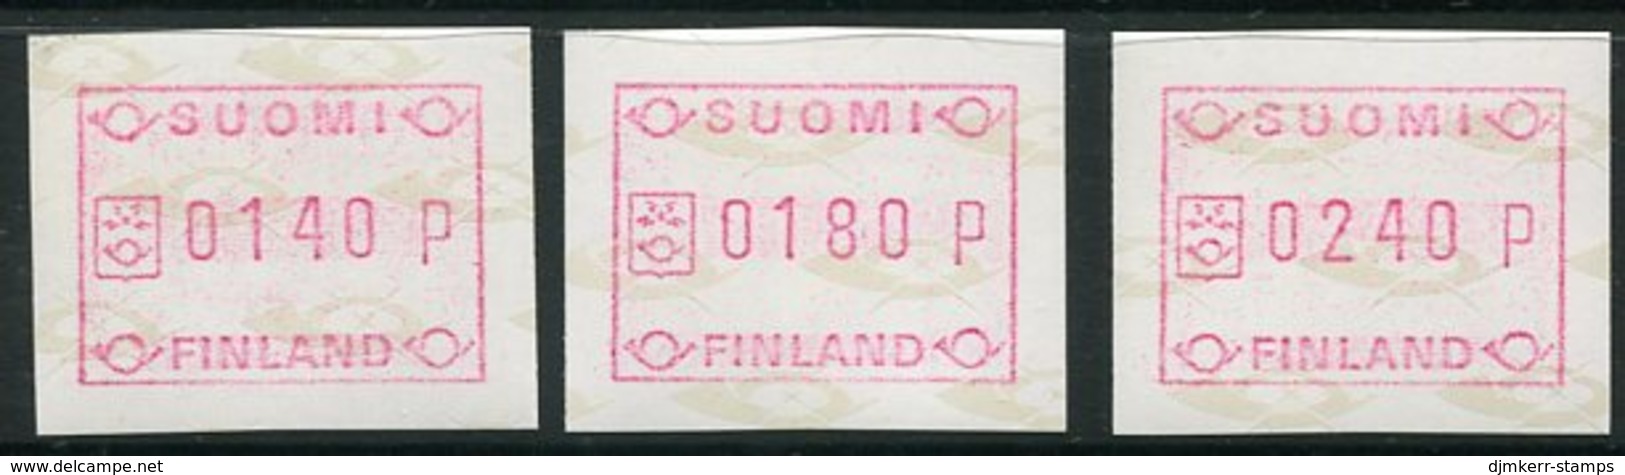 FINLAND 1988 Definitive  ATM, Three Values MNH / **..  Michel 3 - Vignette [ATM]